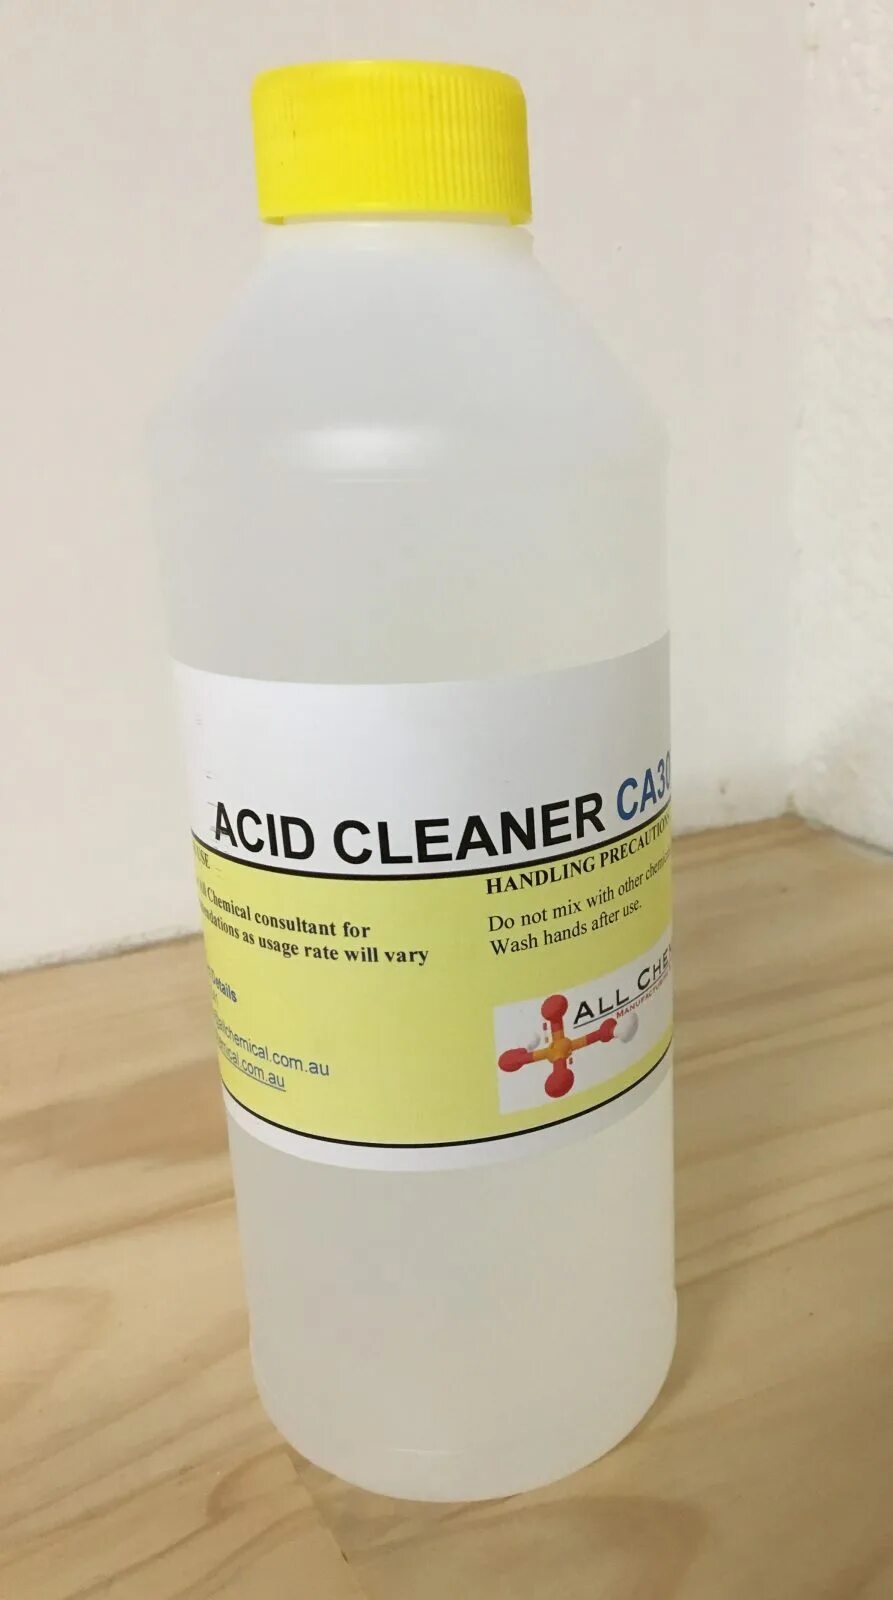 Acid clean. Grass acid Cleaner. Кислота clean. Ацид Mediex моющее средство. Cr745 acid Cleaner.